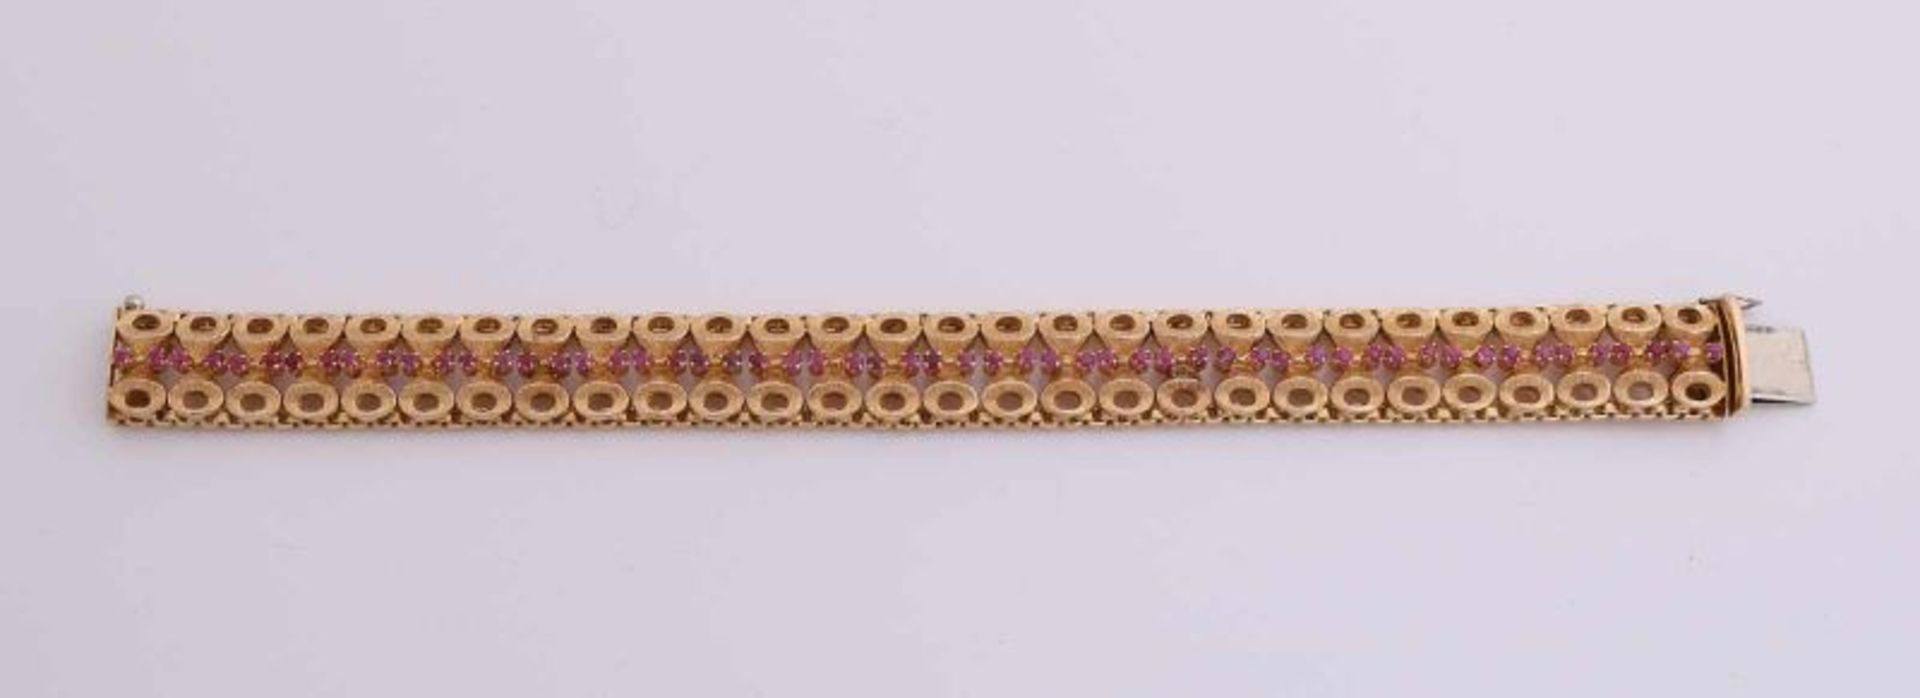 Elegant yellow gold bracelet, 750/000, with rubies. Wide gold link bracelet with matte processing. - Bild 2 aus 2